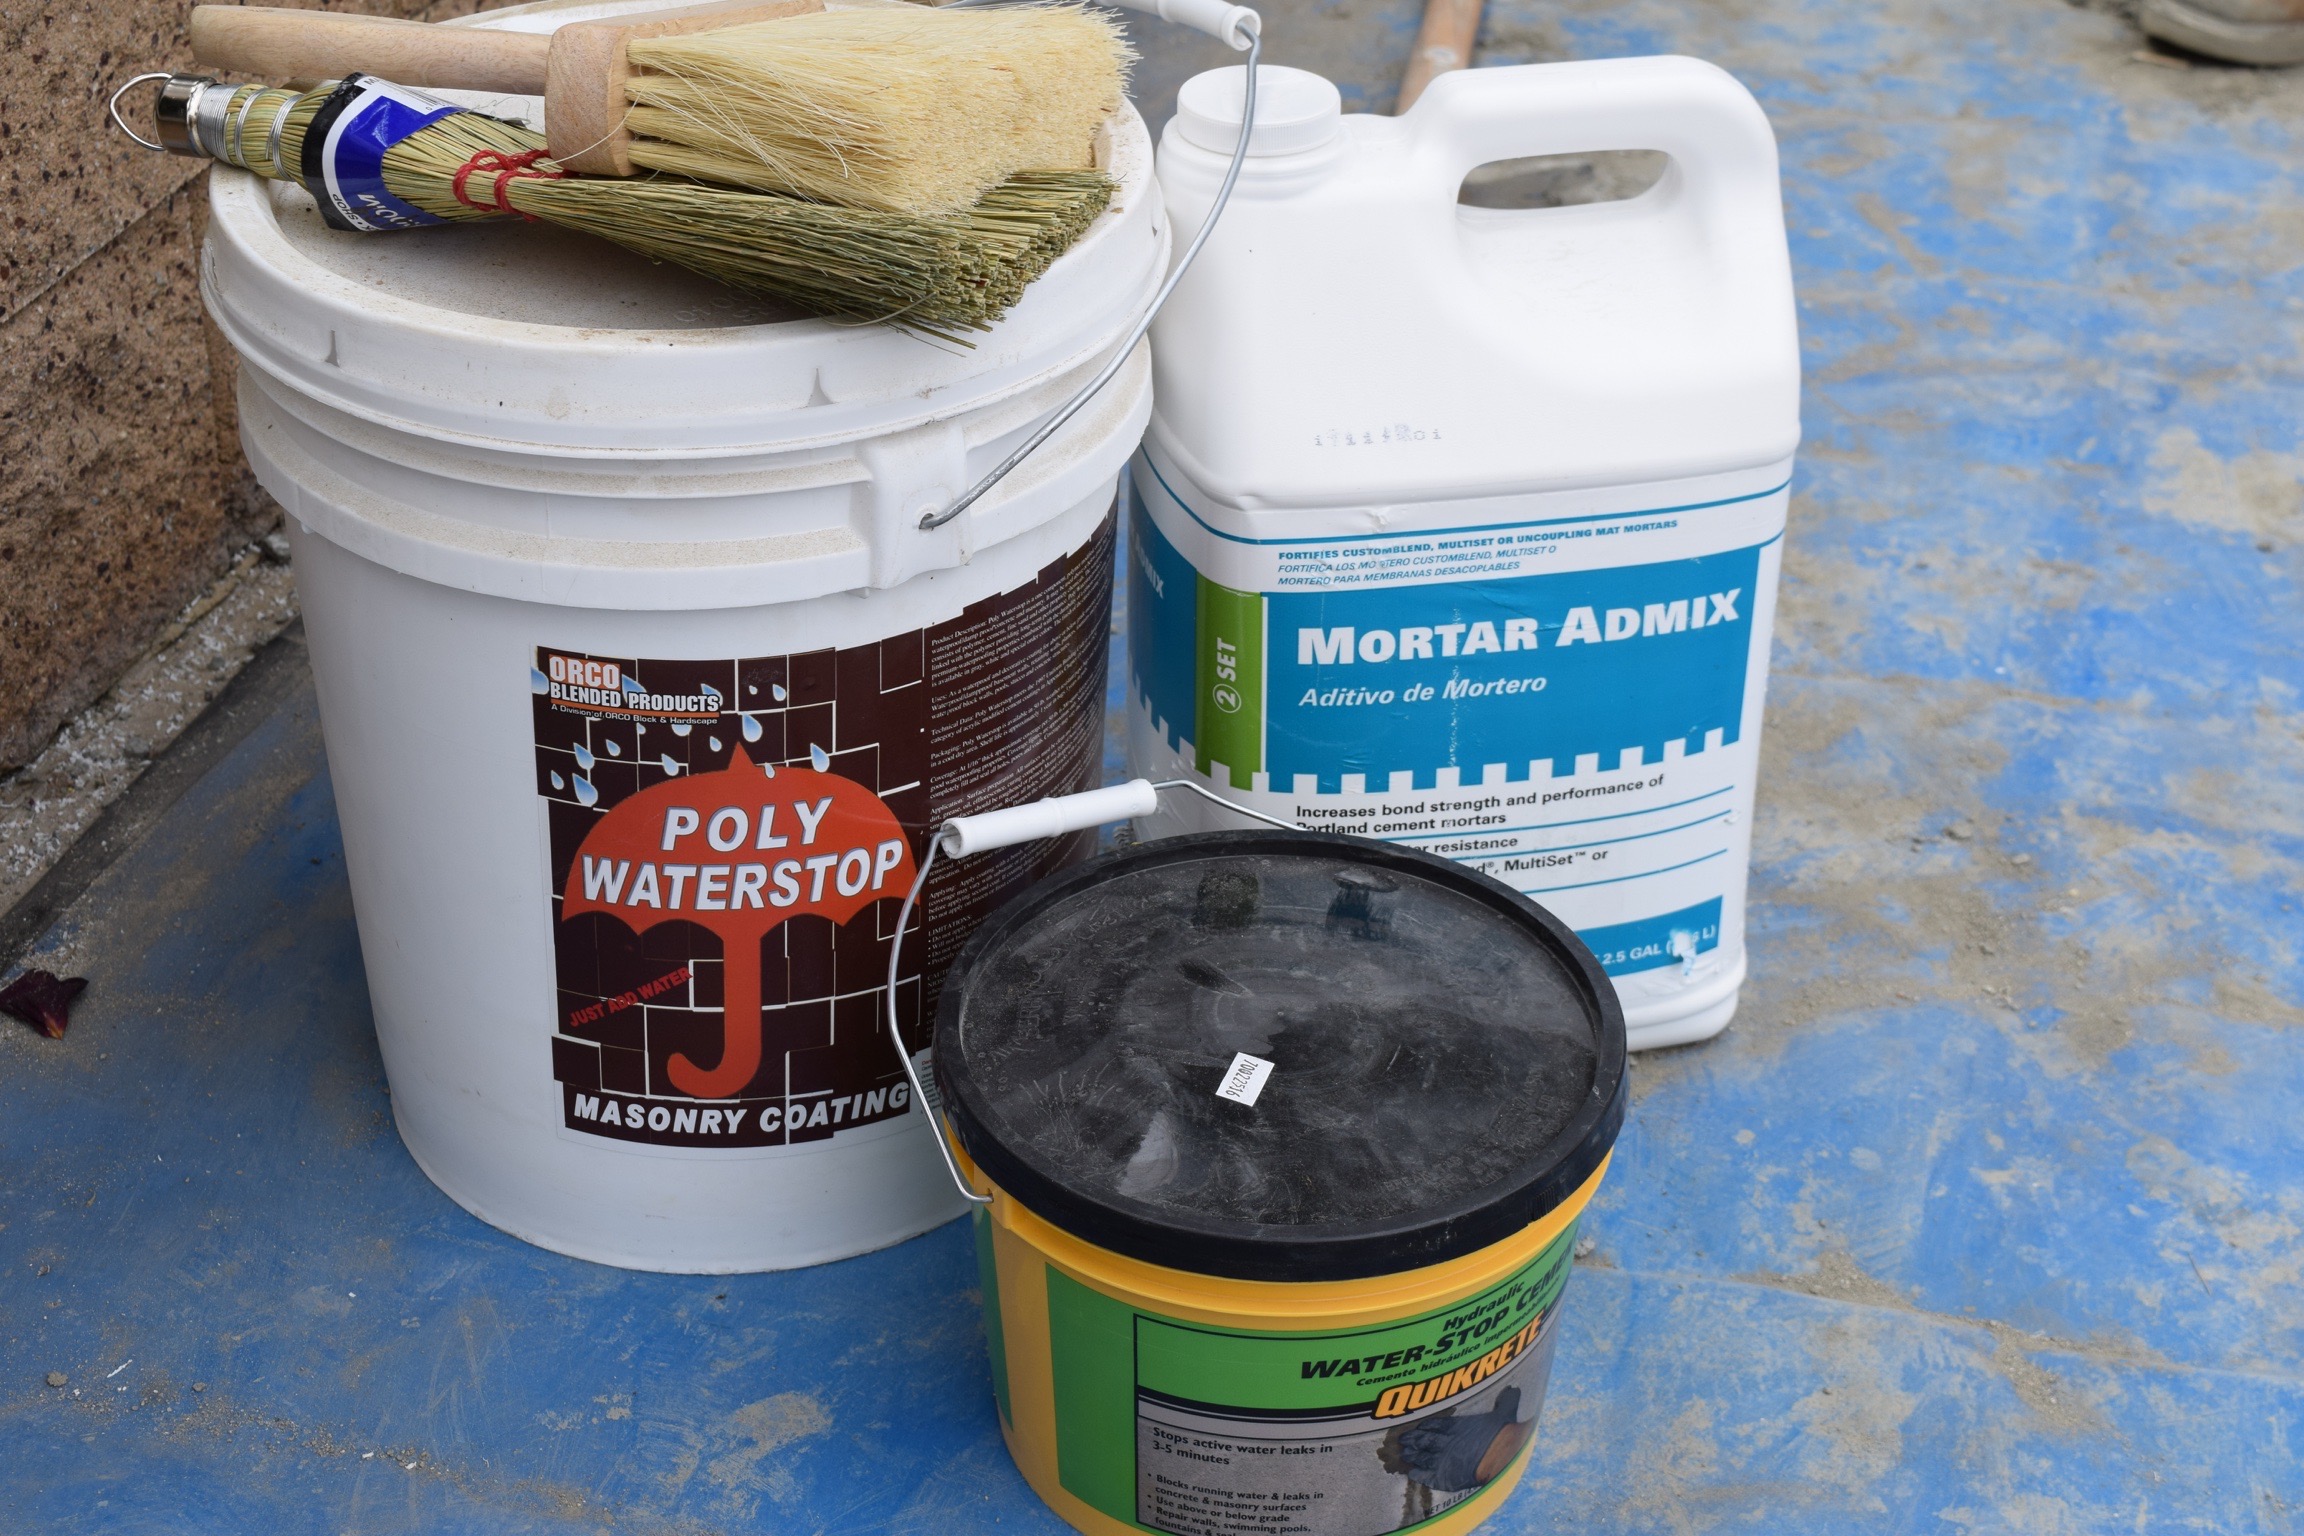 Poly Waterstop waterproofing product